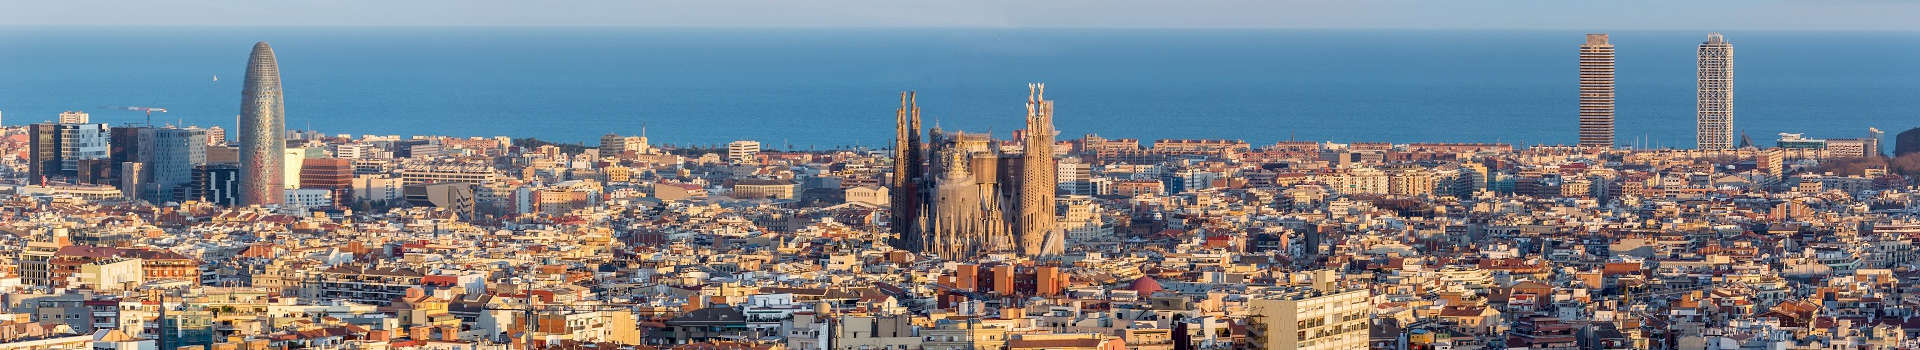 sagrada famillia panorama view Barcelona